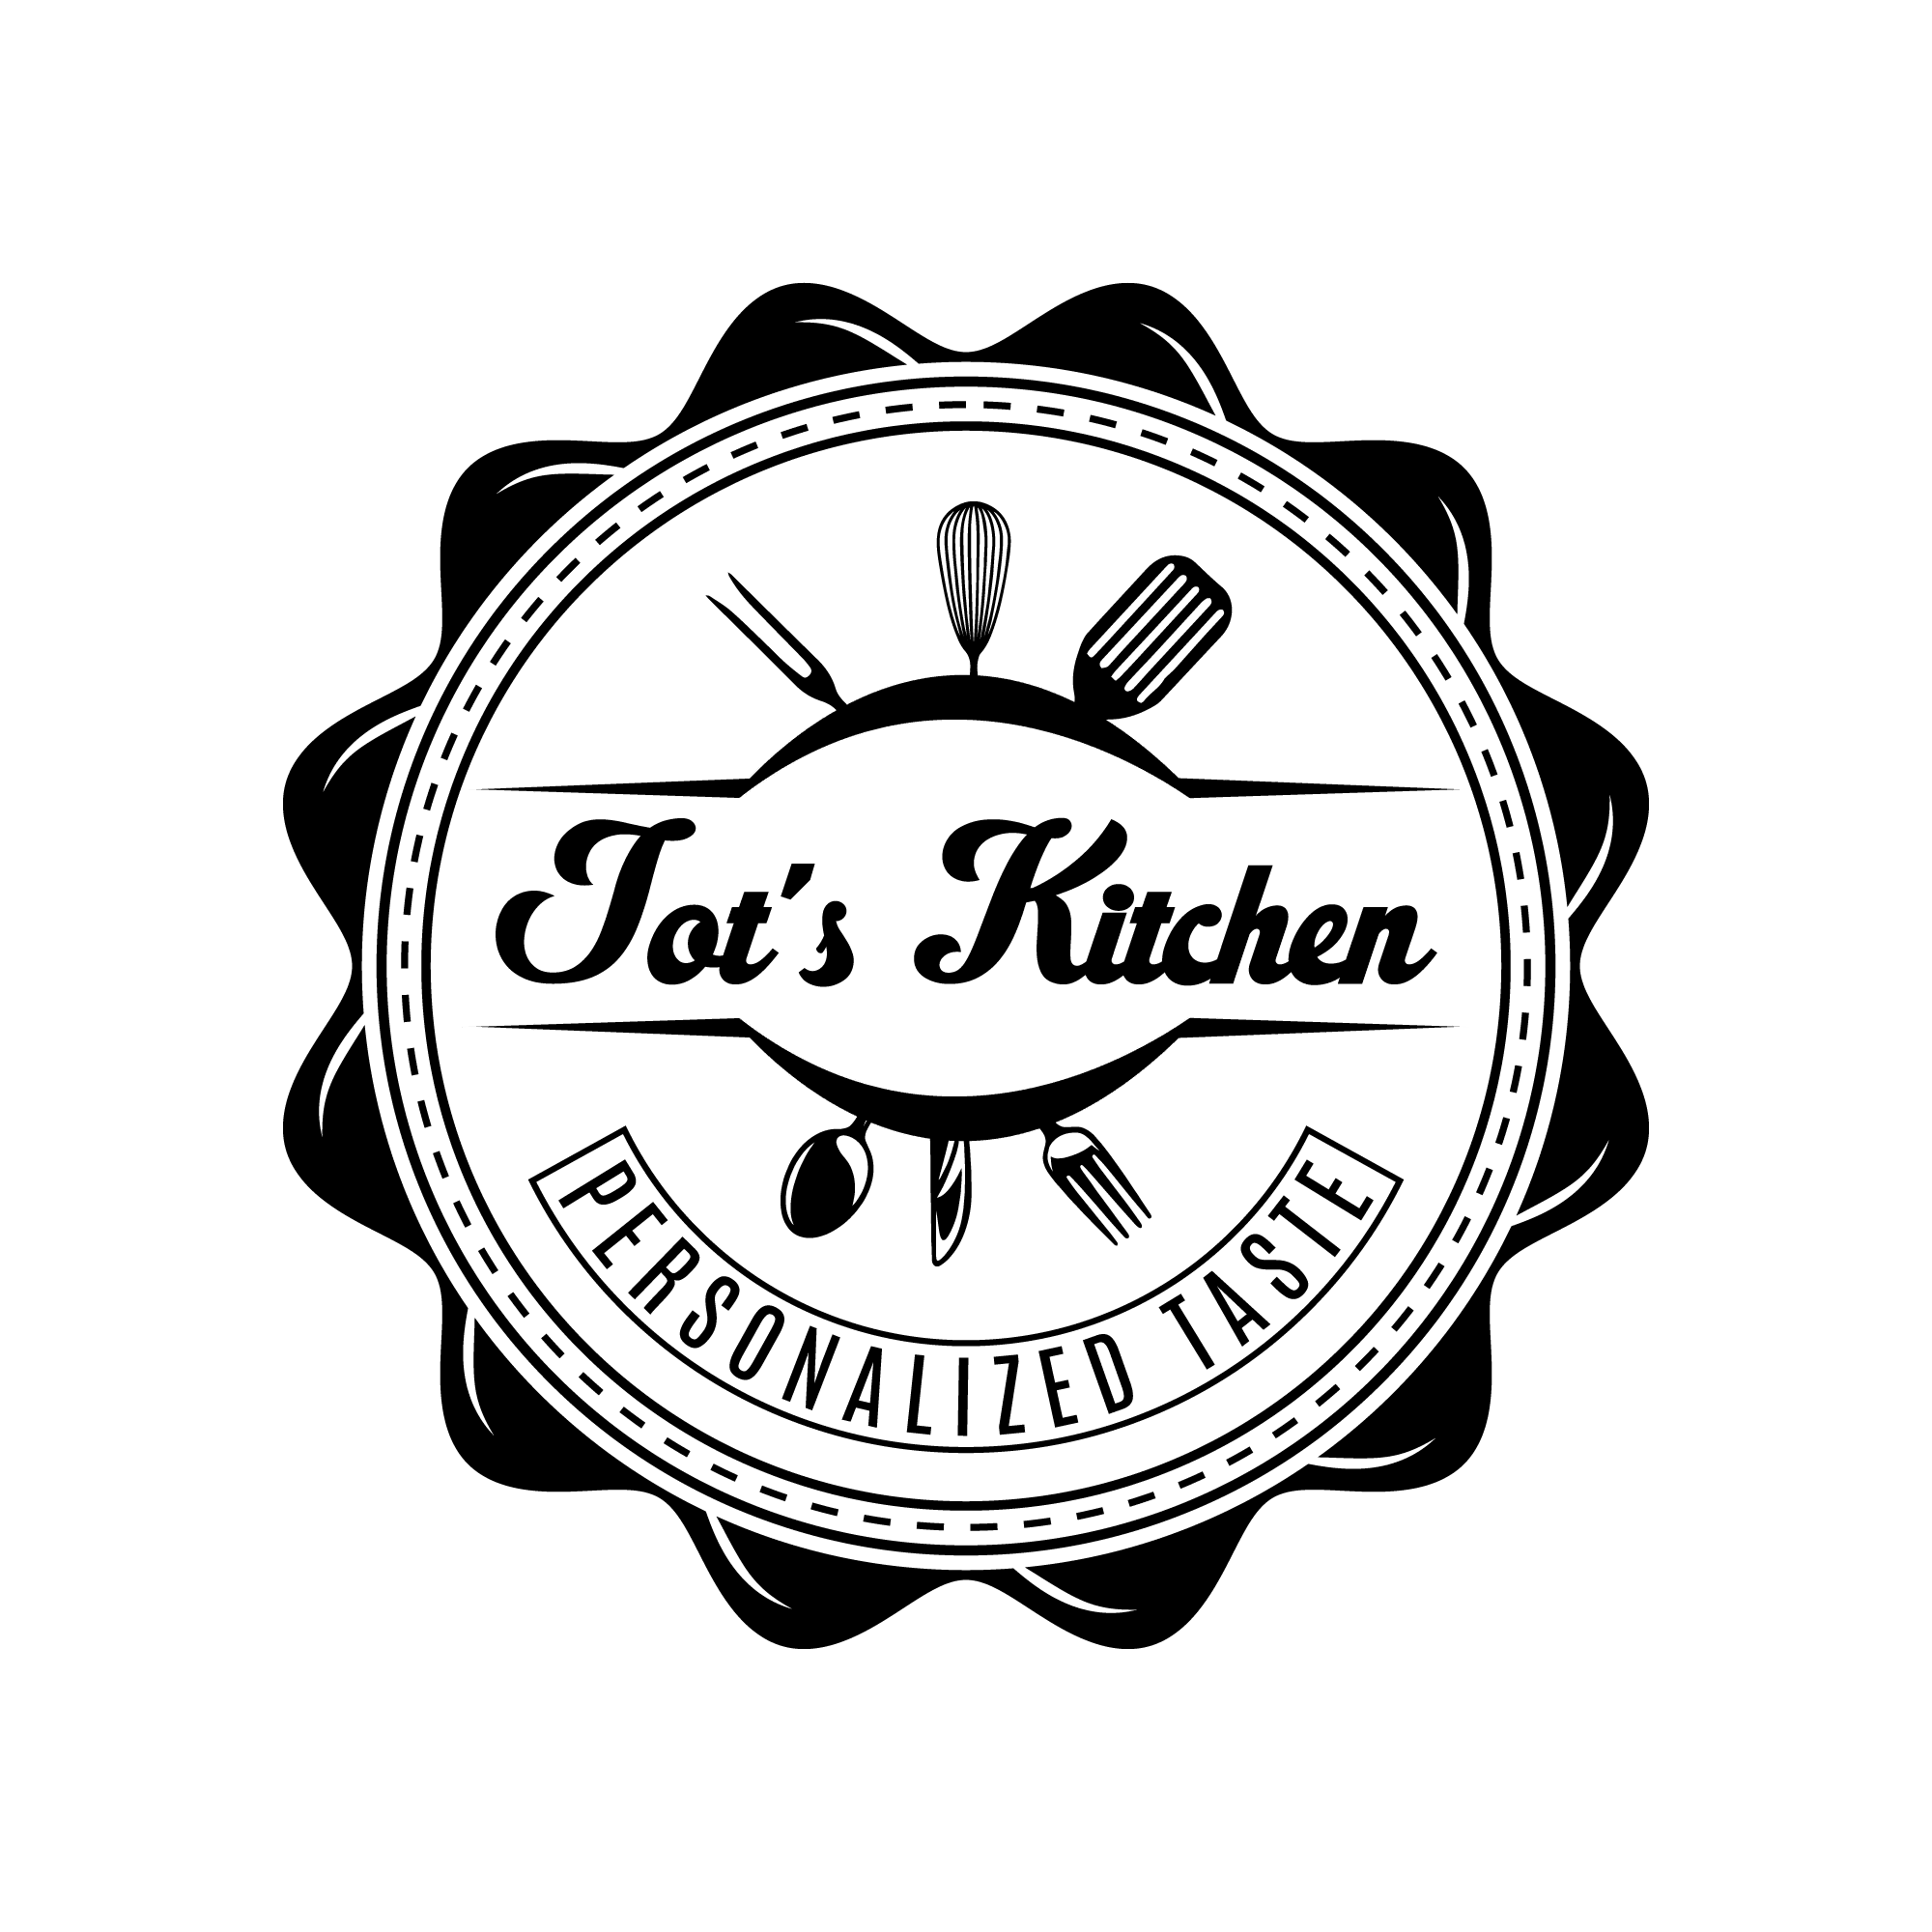 Jot's Kitchen